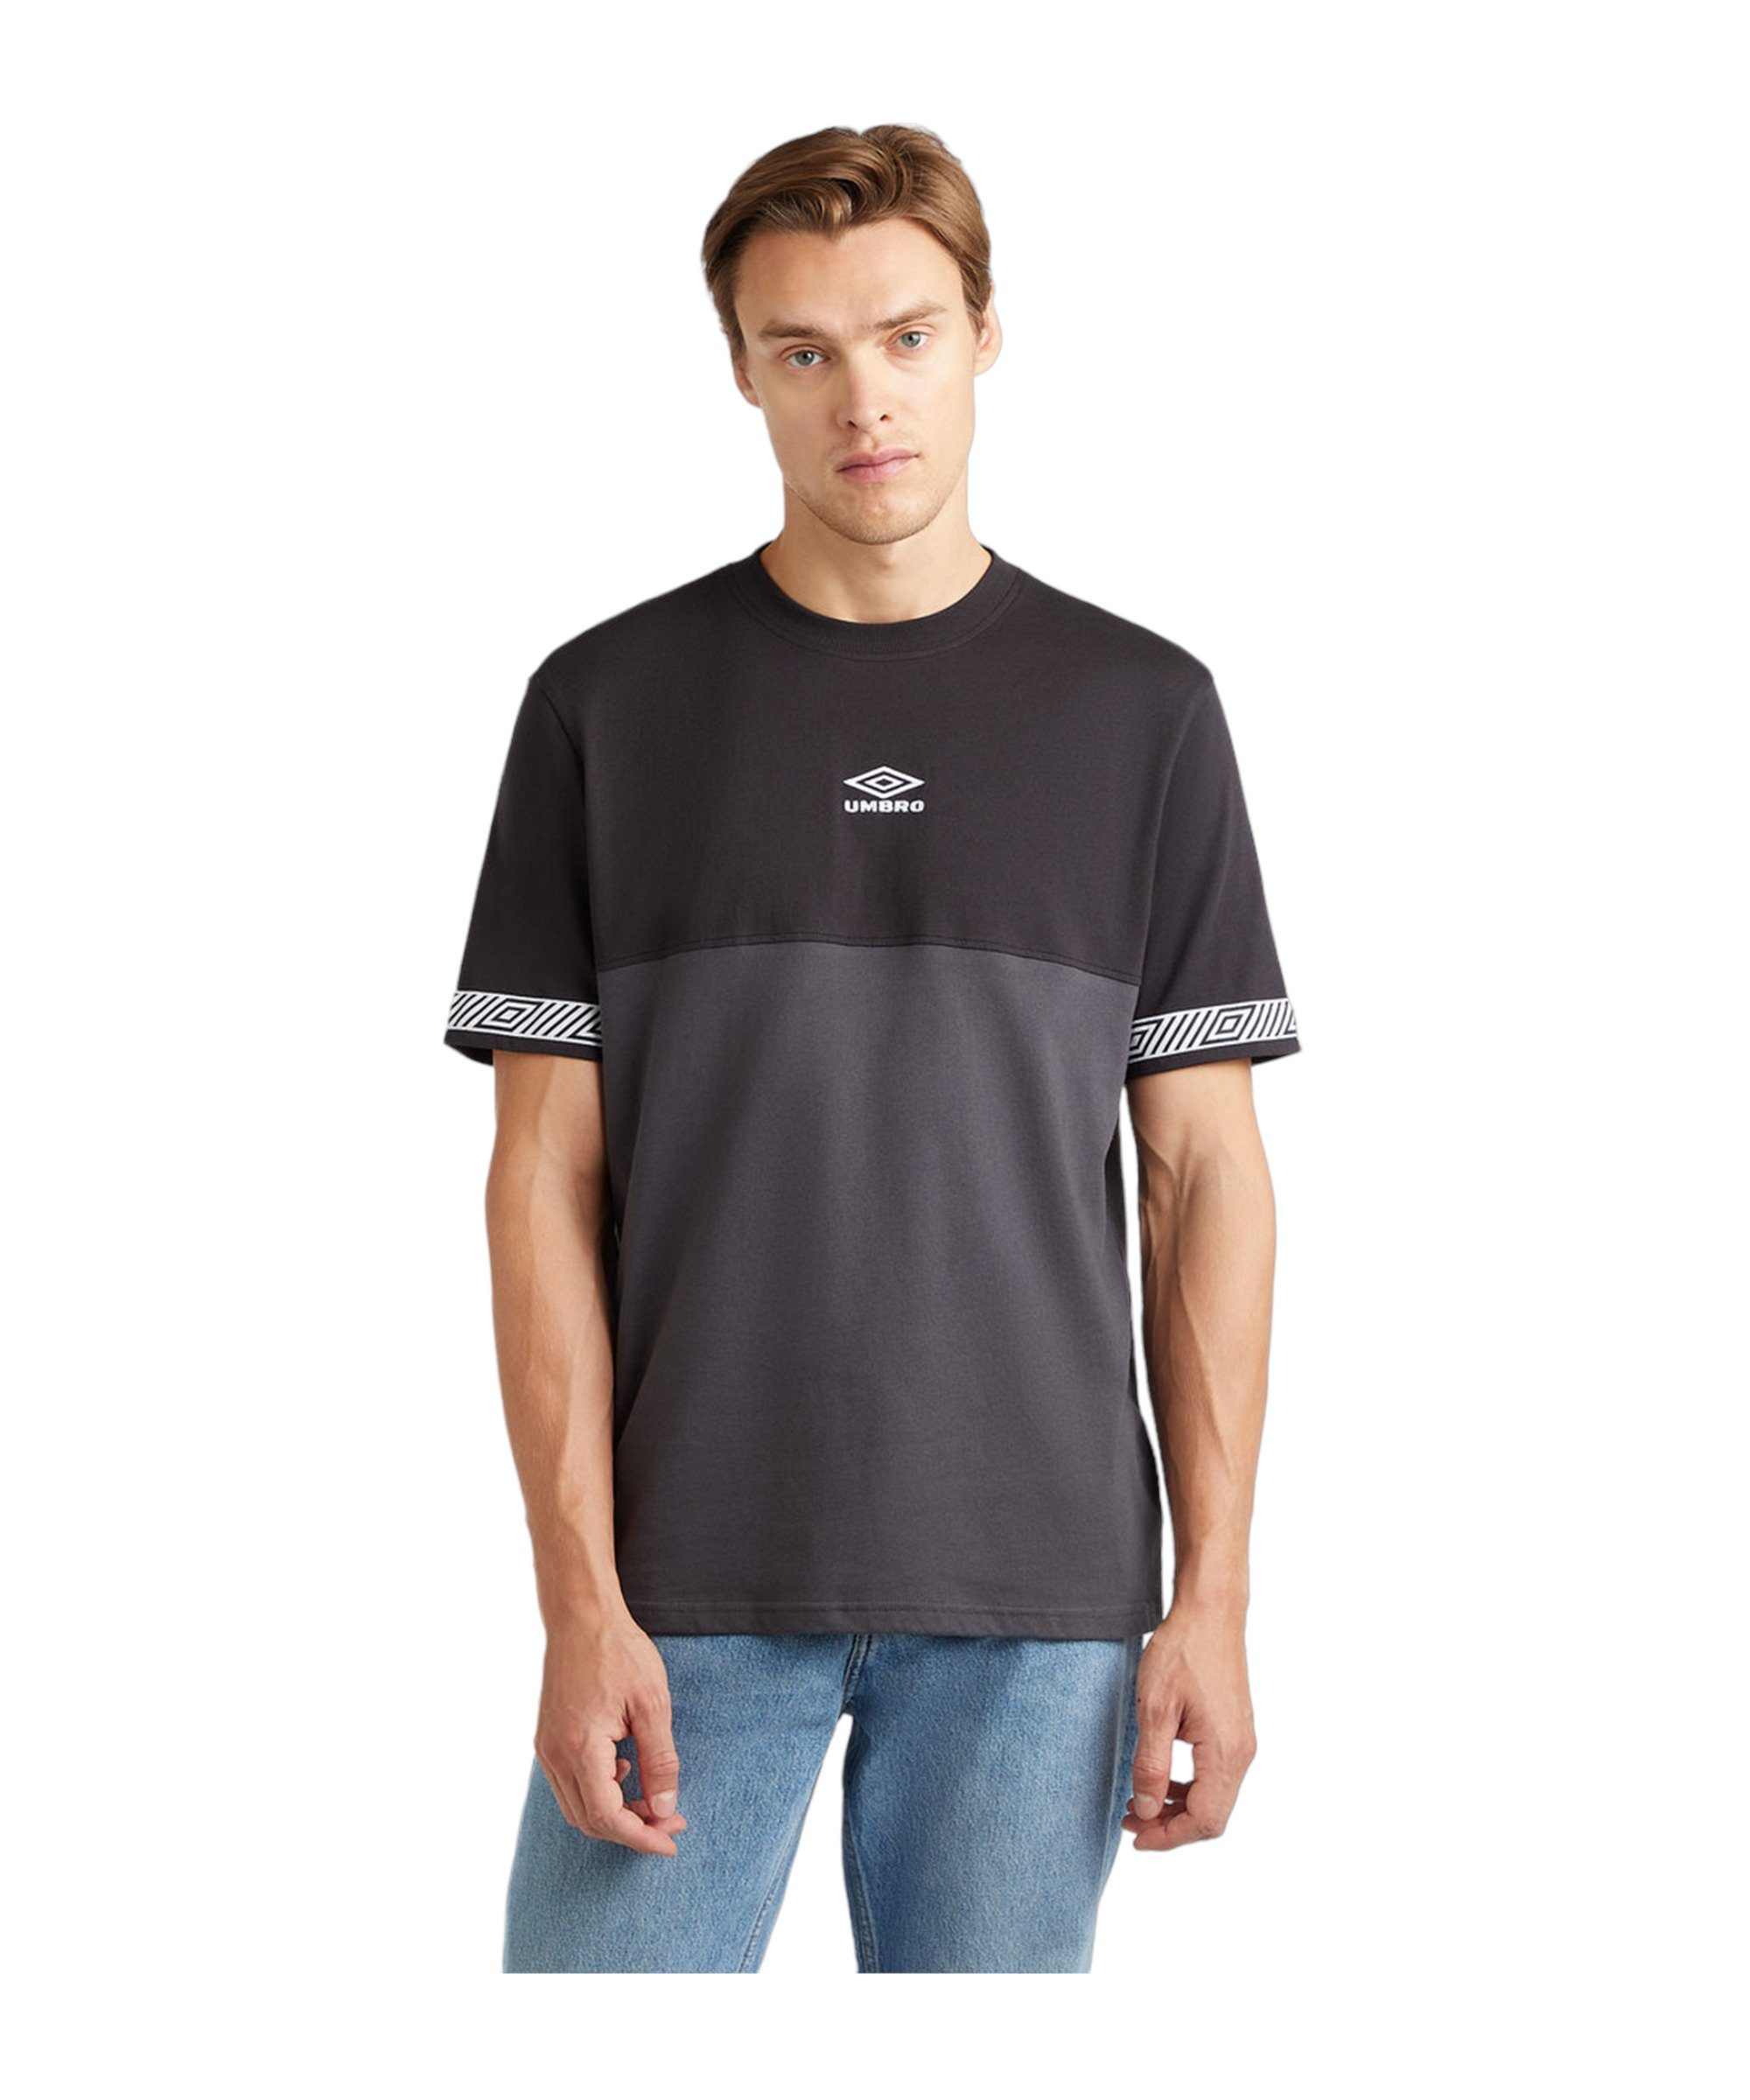 Umbro T-Shirt Sports Style default Club Crew T-Shirt grauschwarz